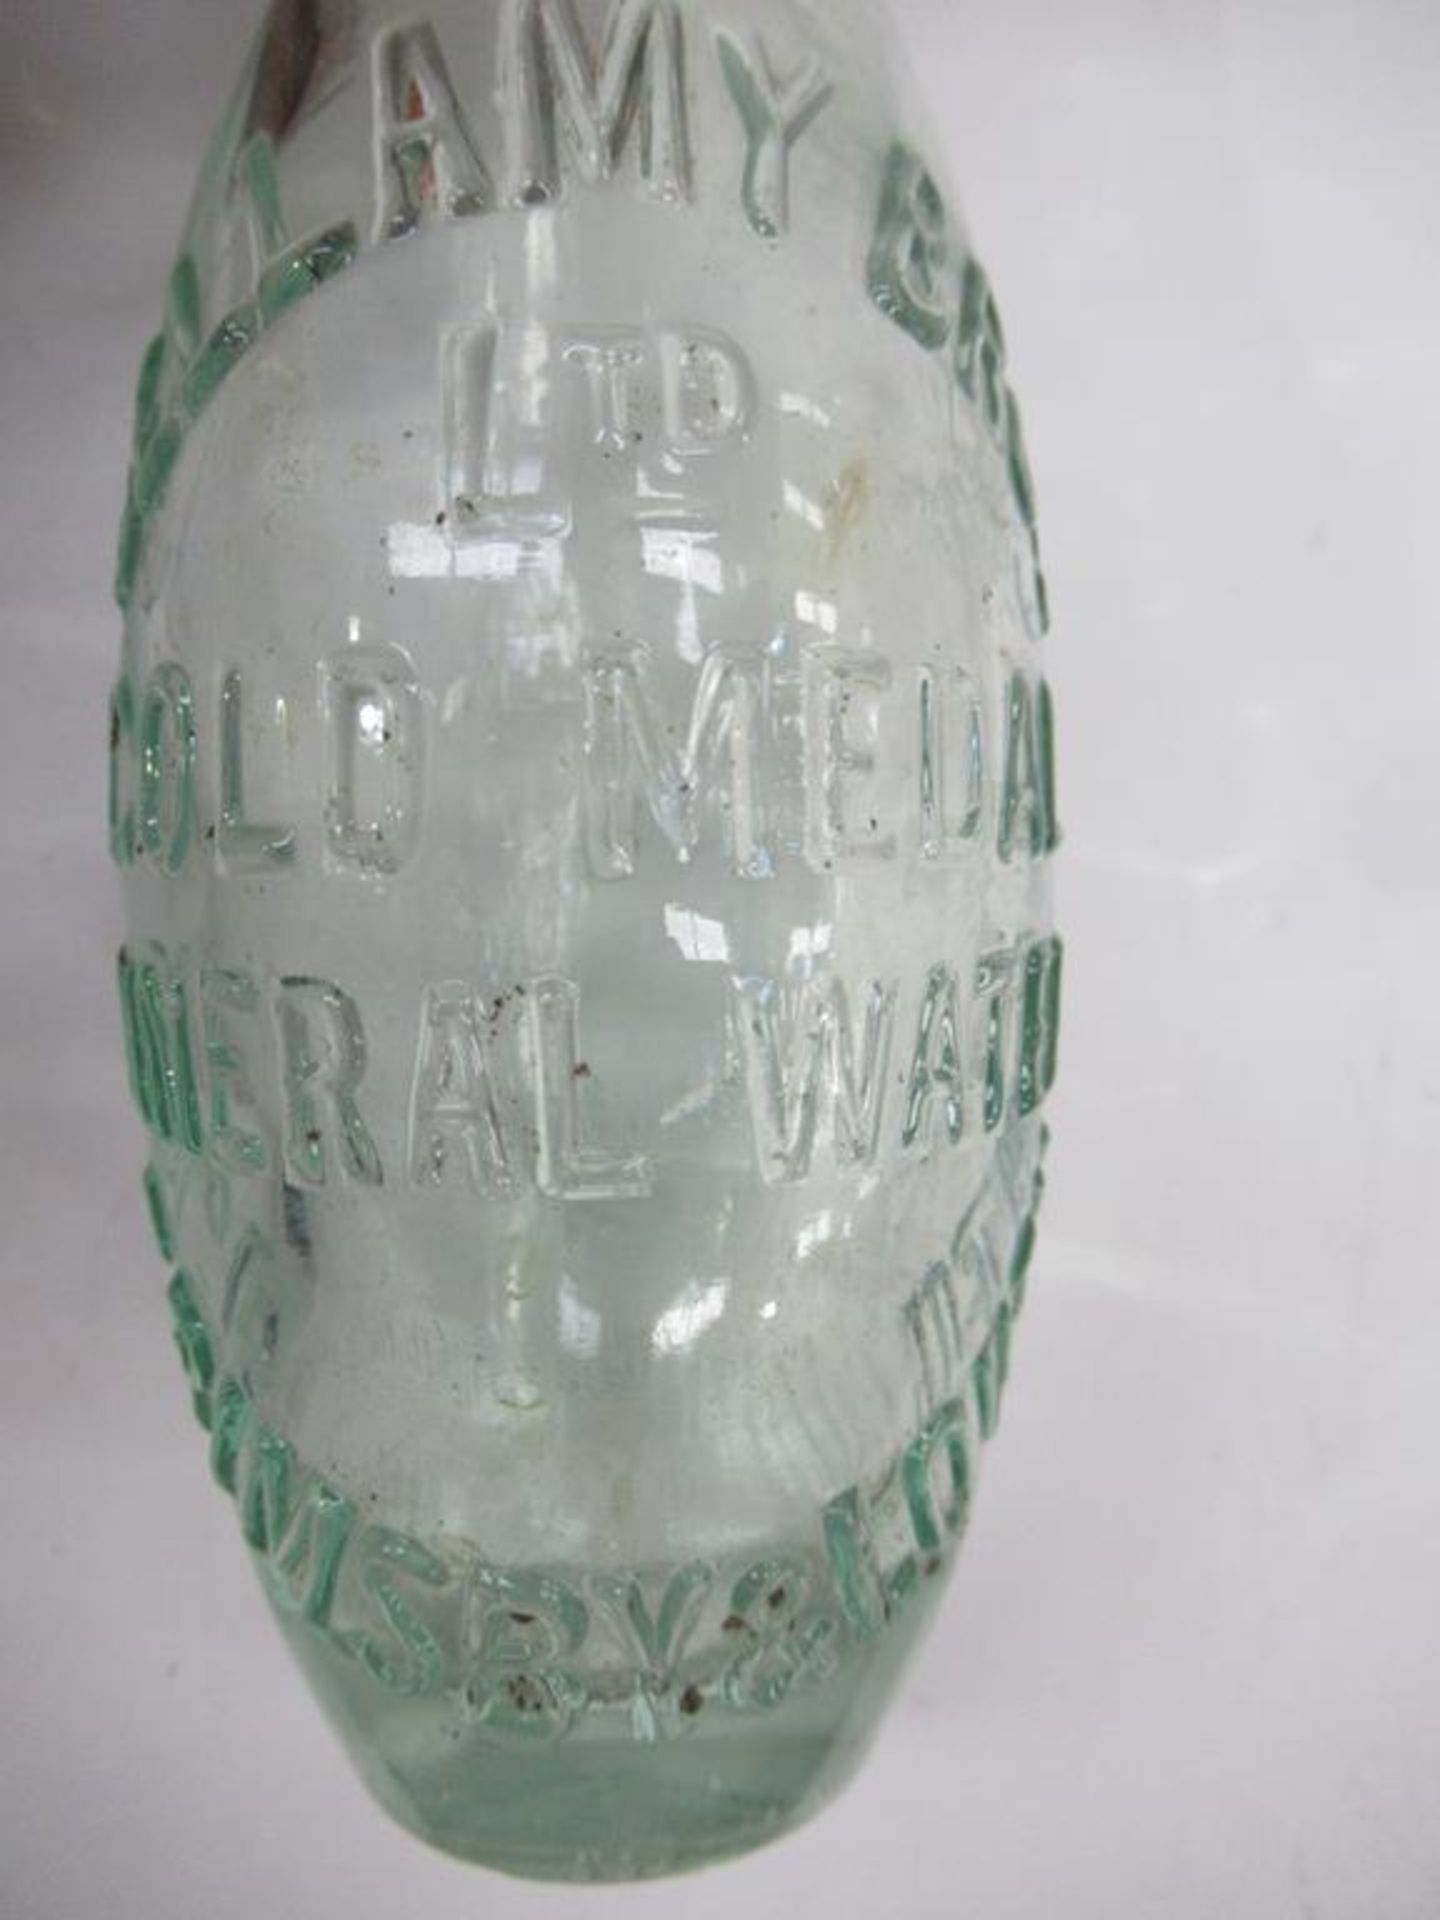 Grimsby Bellamy Bro Ltd Gold Medal bottle - Image 6 of 6